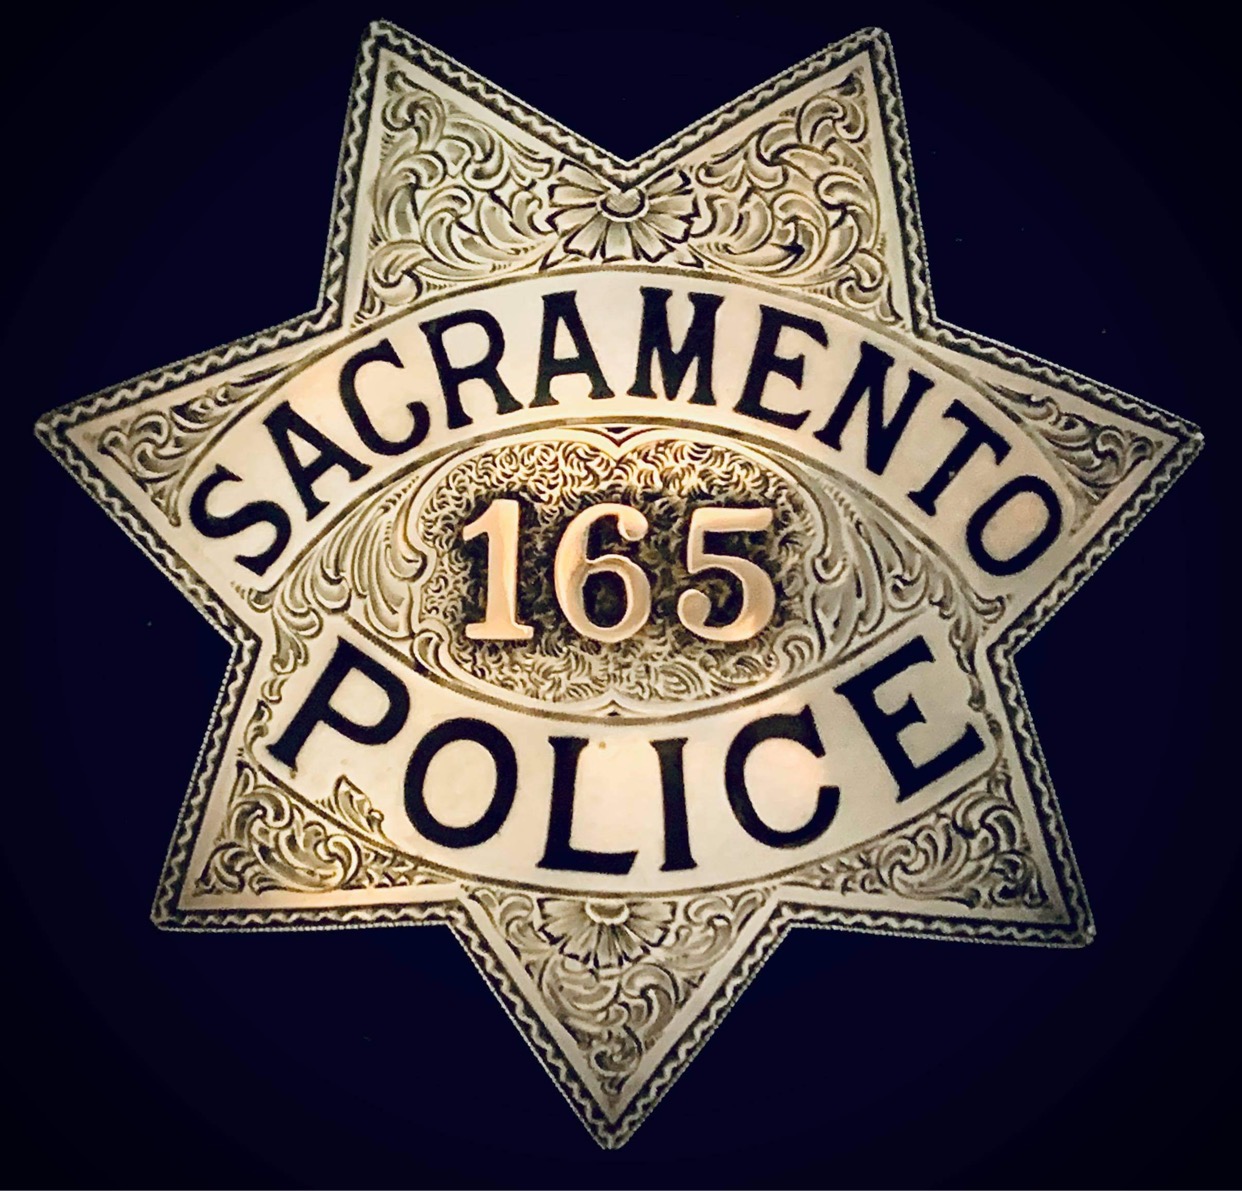 Engraved sterling silver Sacramento, CA police badge #165.